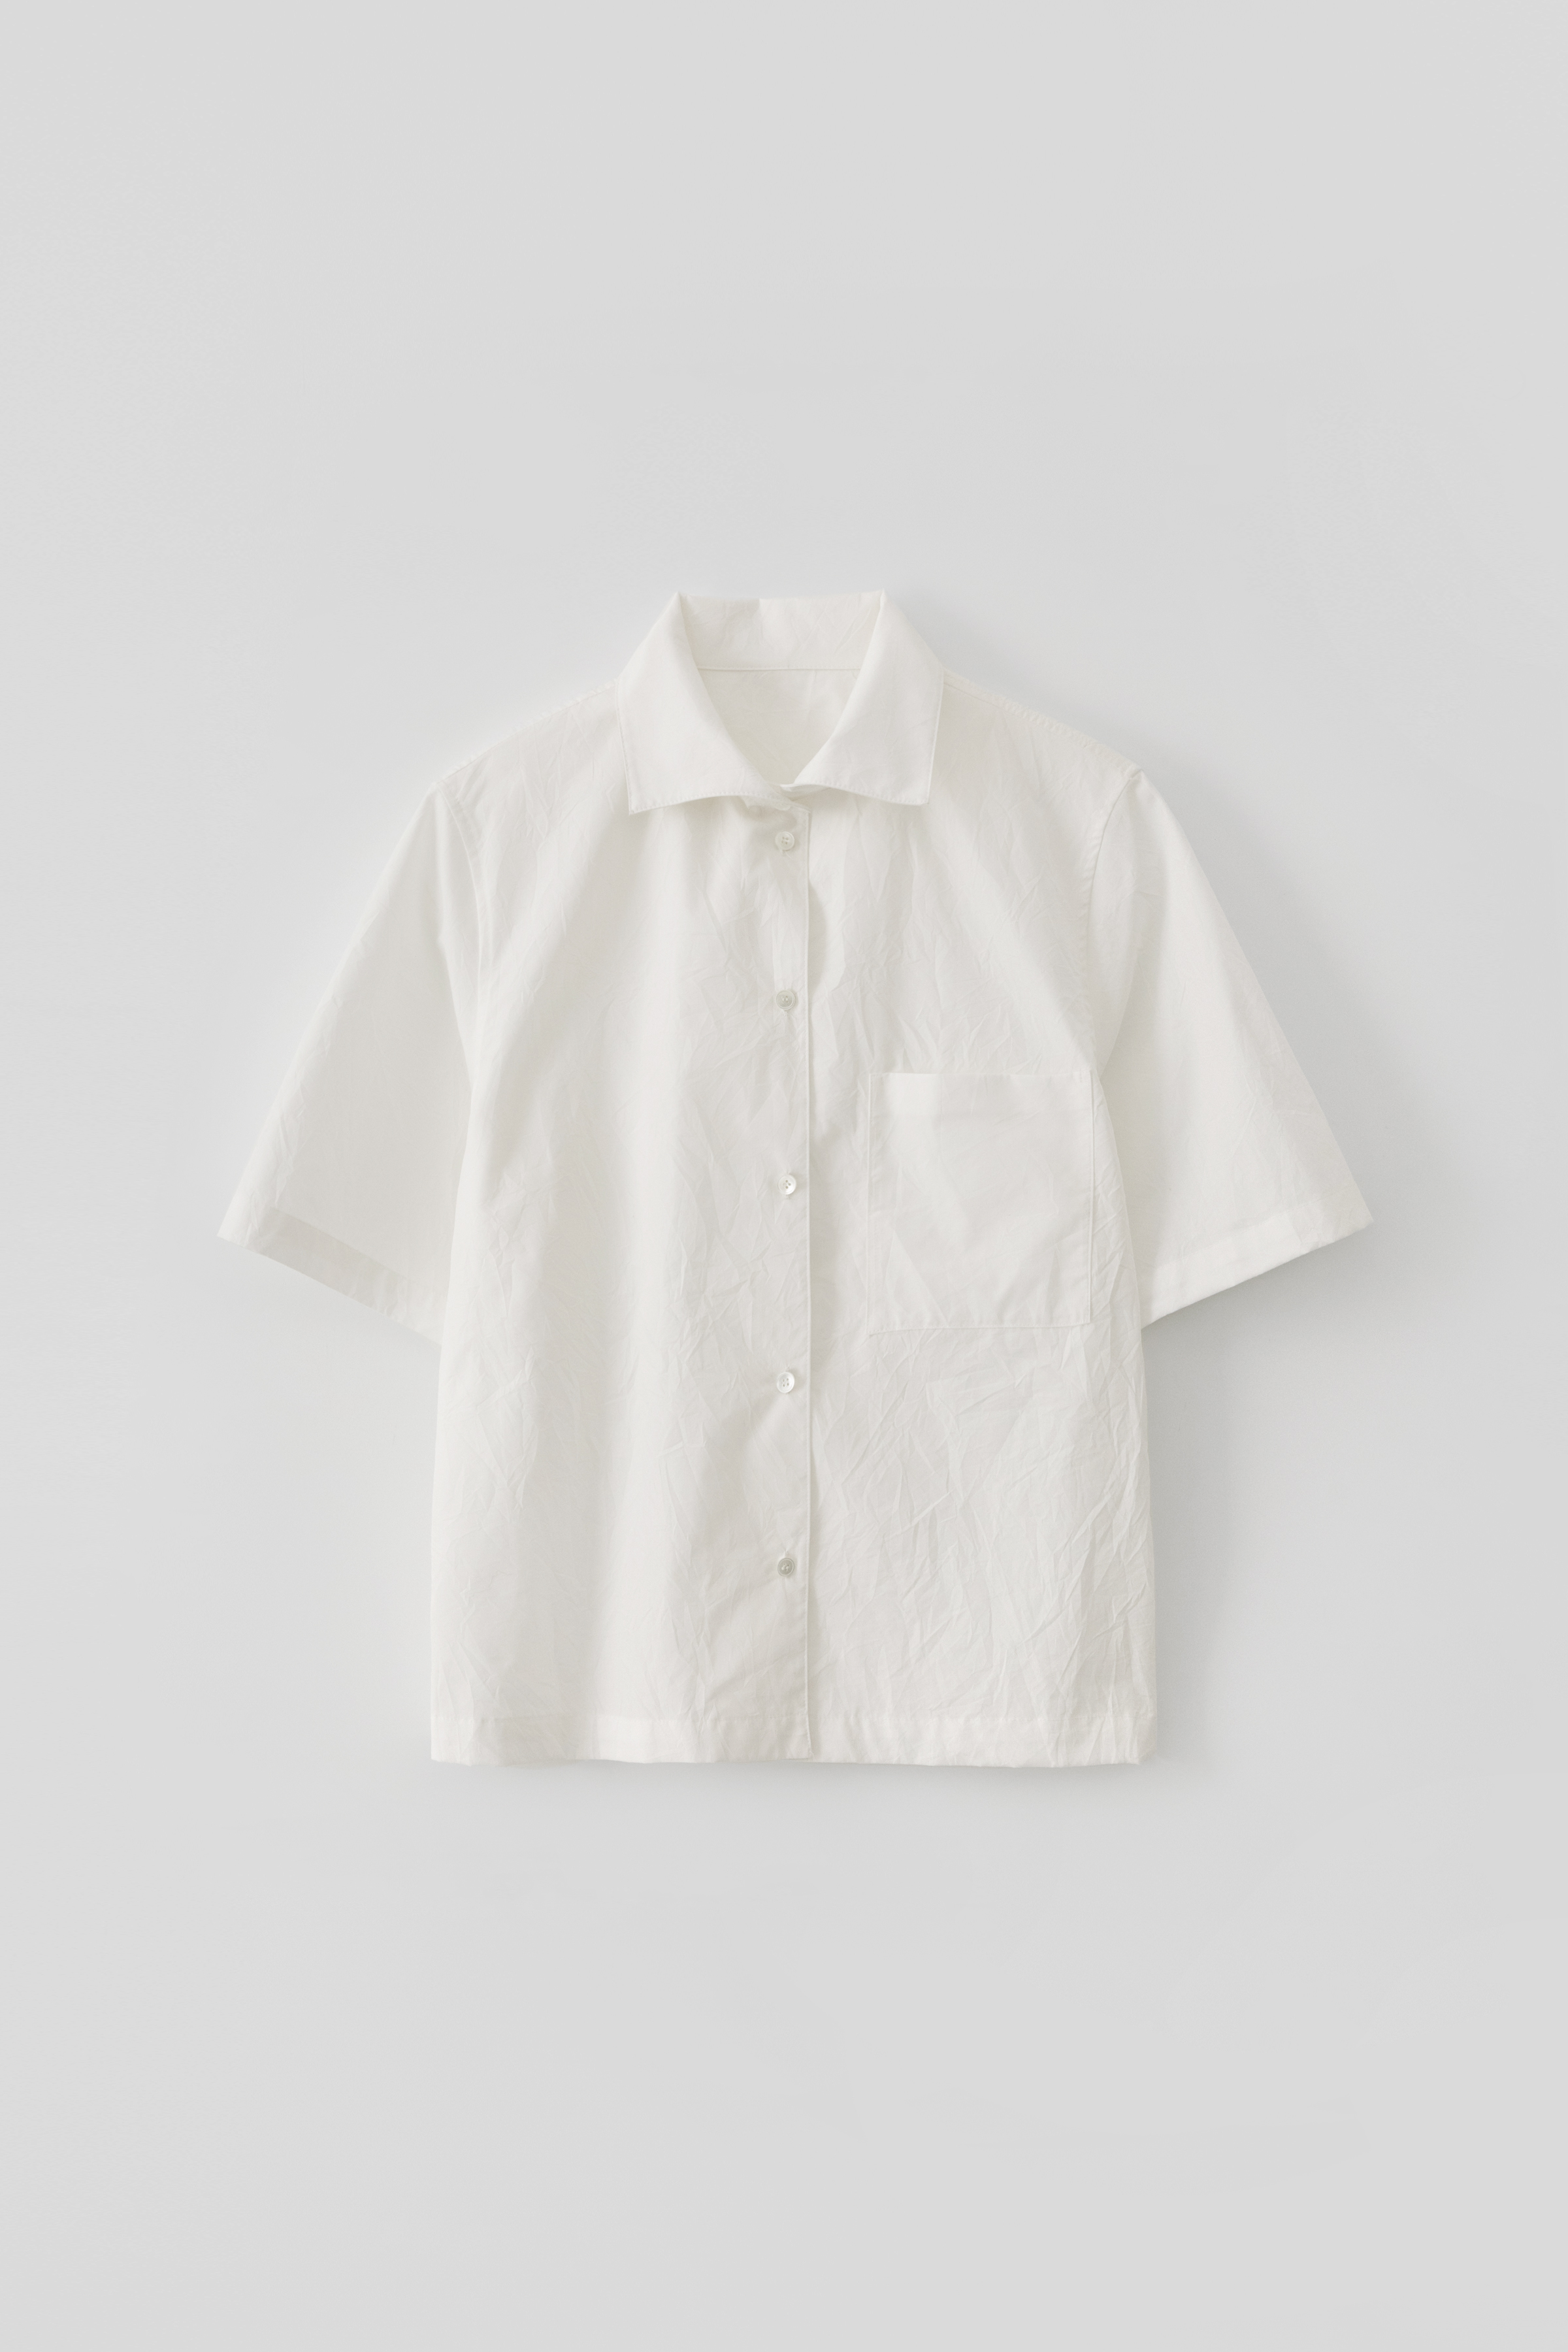 Crease Pocket Shirt_White